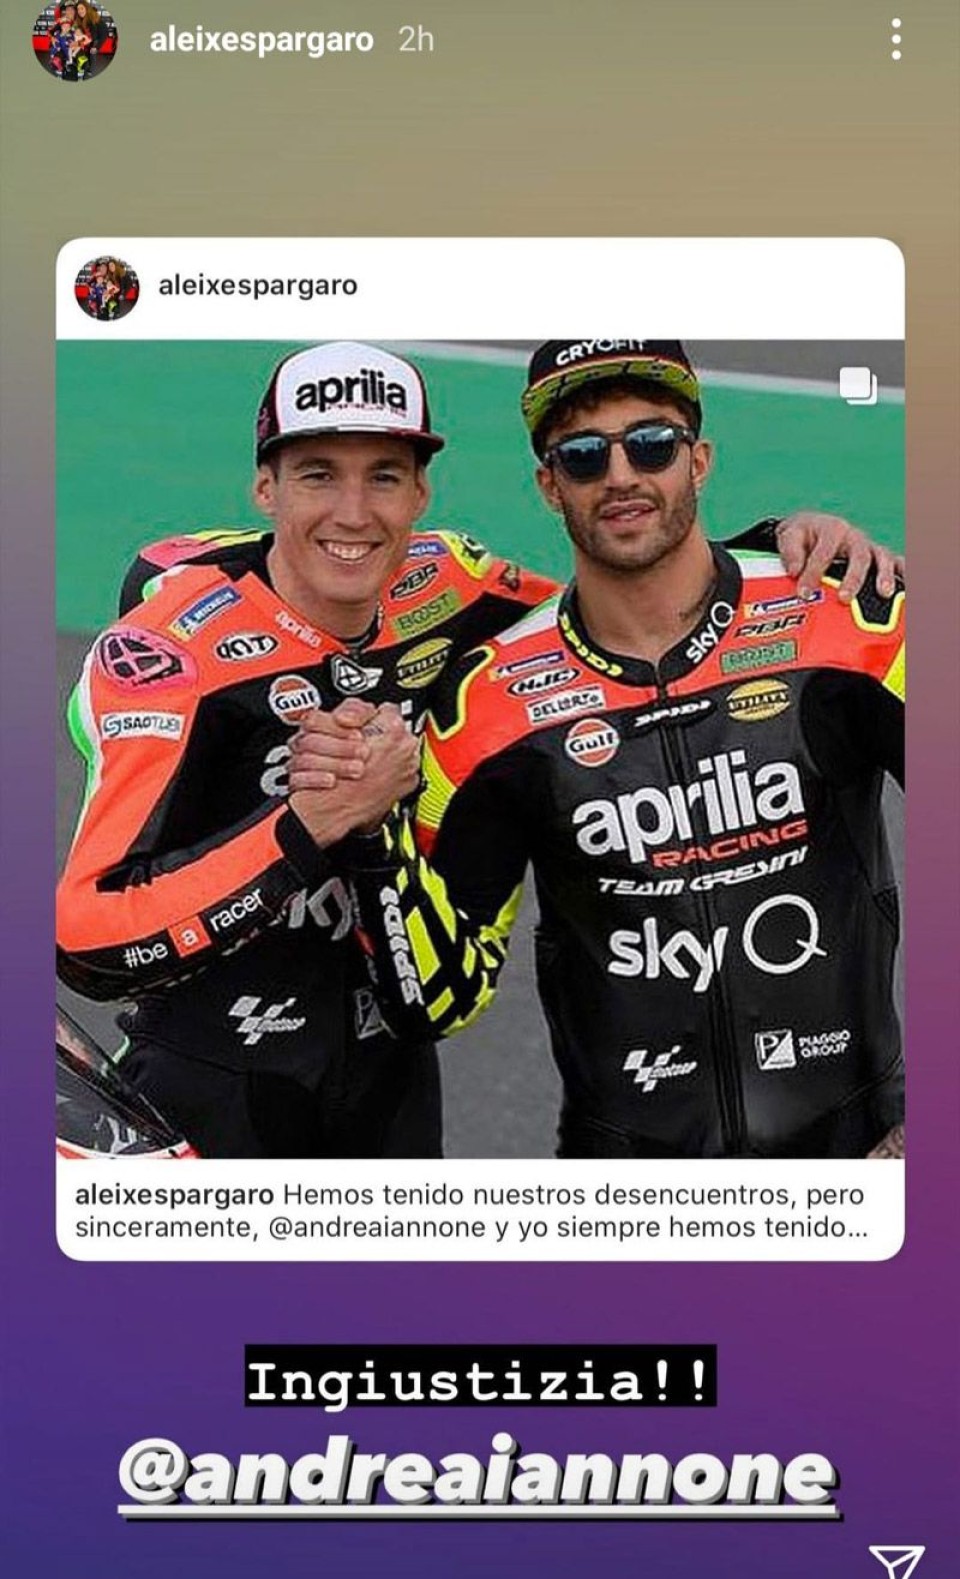 MotoGP: Aleix Espargaró sta con Andrea Iannone: "Ingiustizia!!"